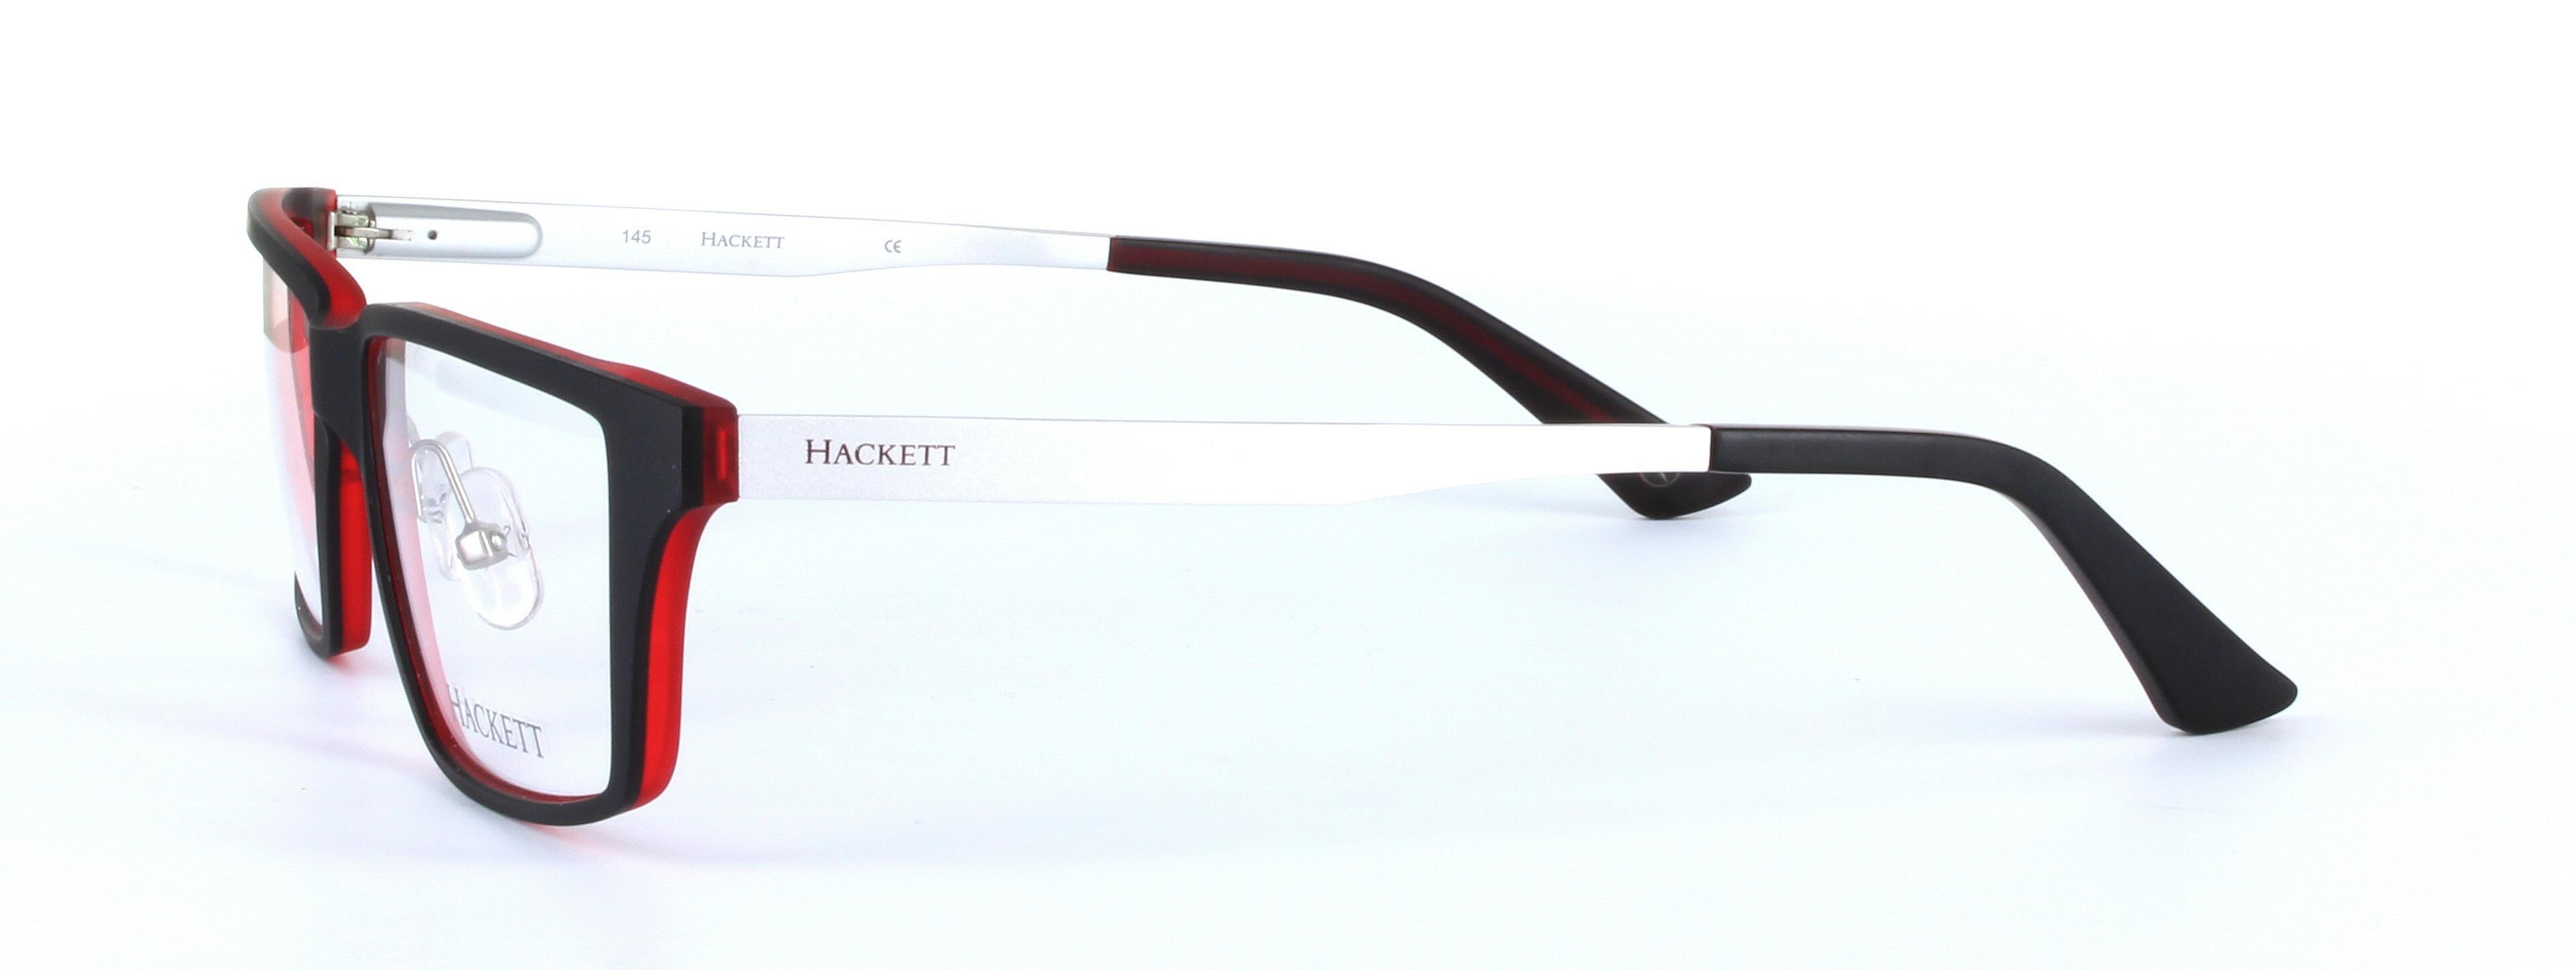 HACKETT (HEK1155-040) Black Full Rim Rectangular Acetate Glasses - Image View 2